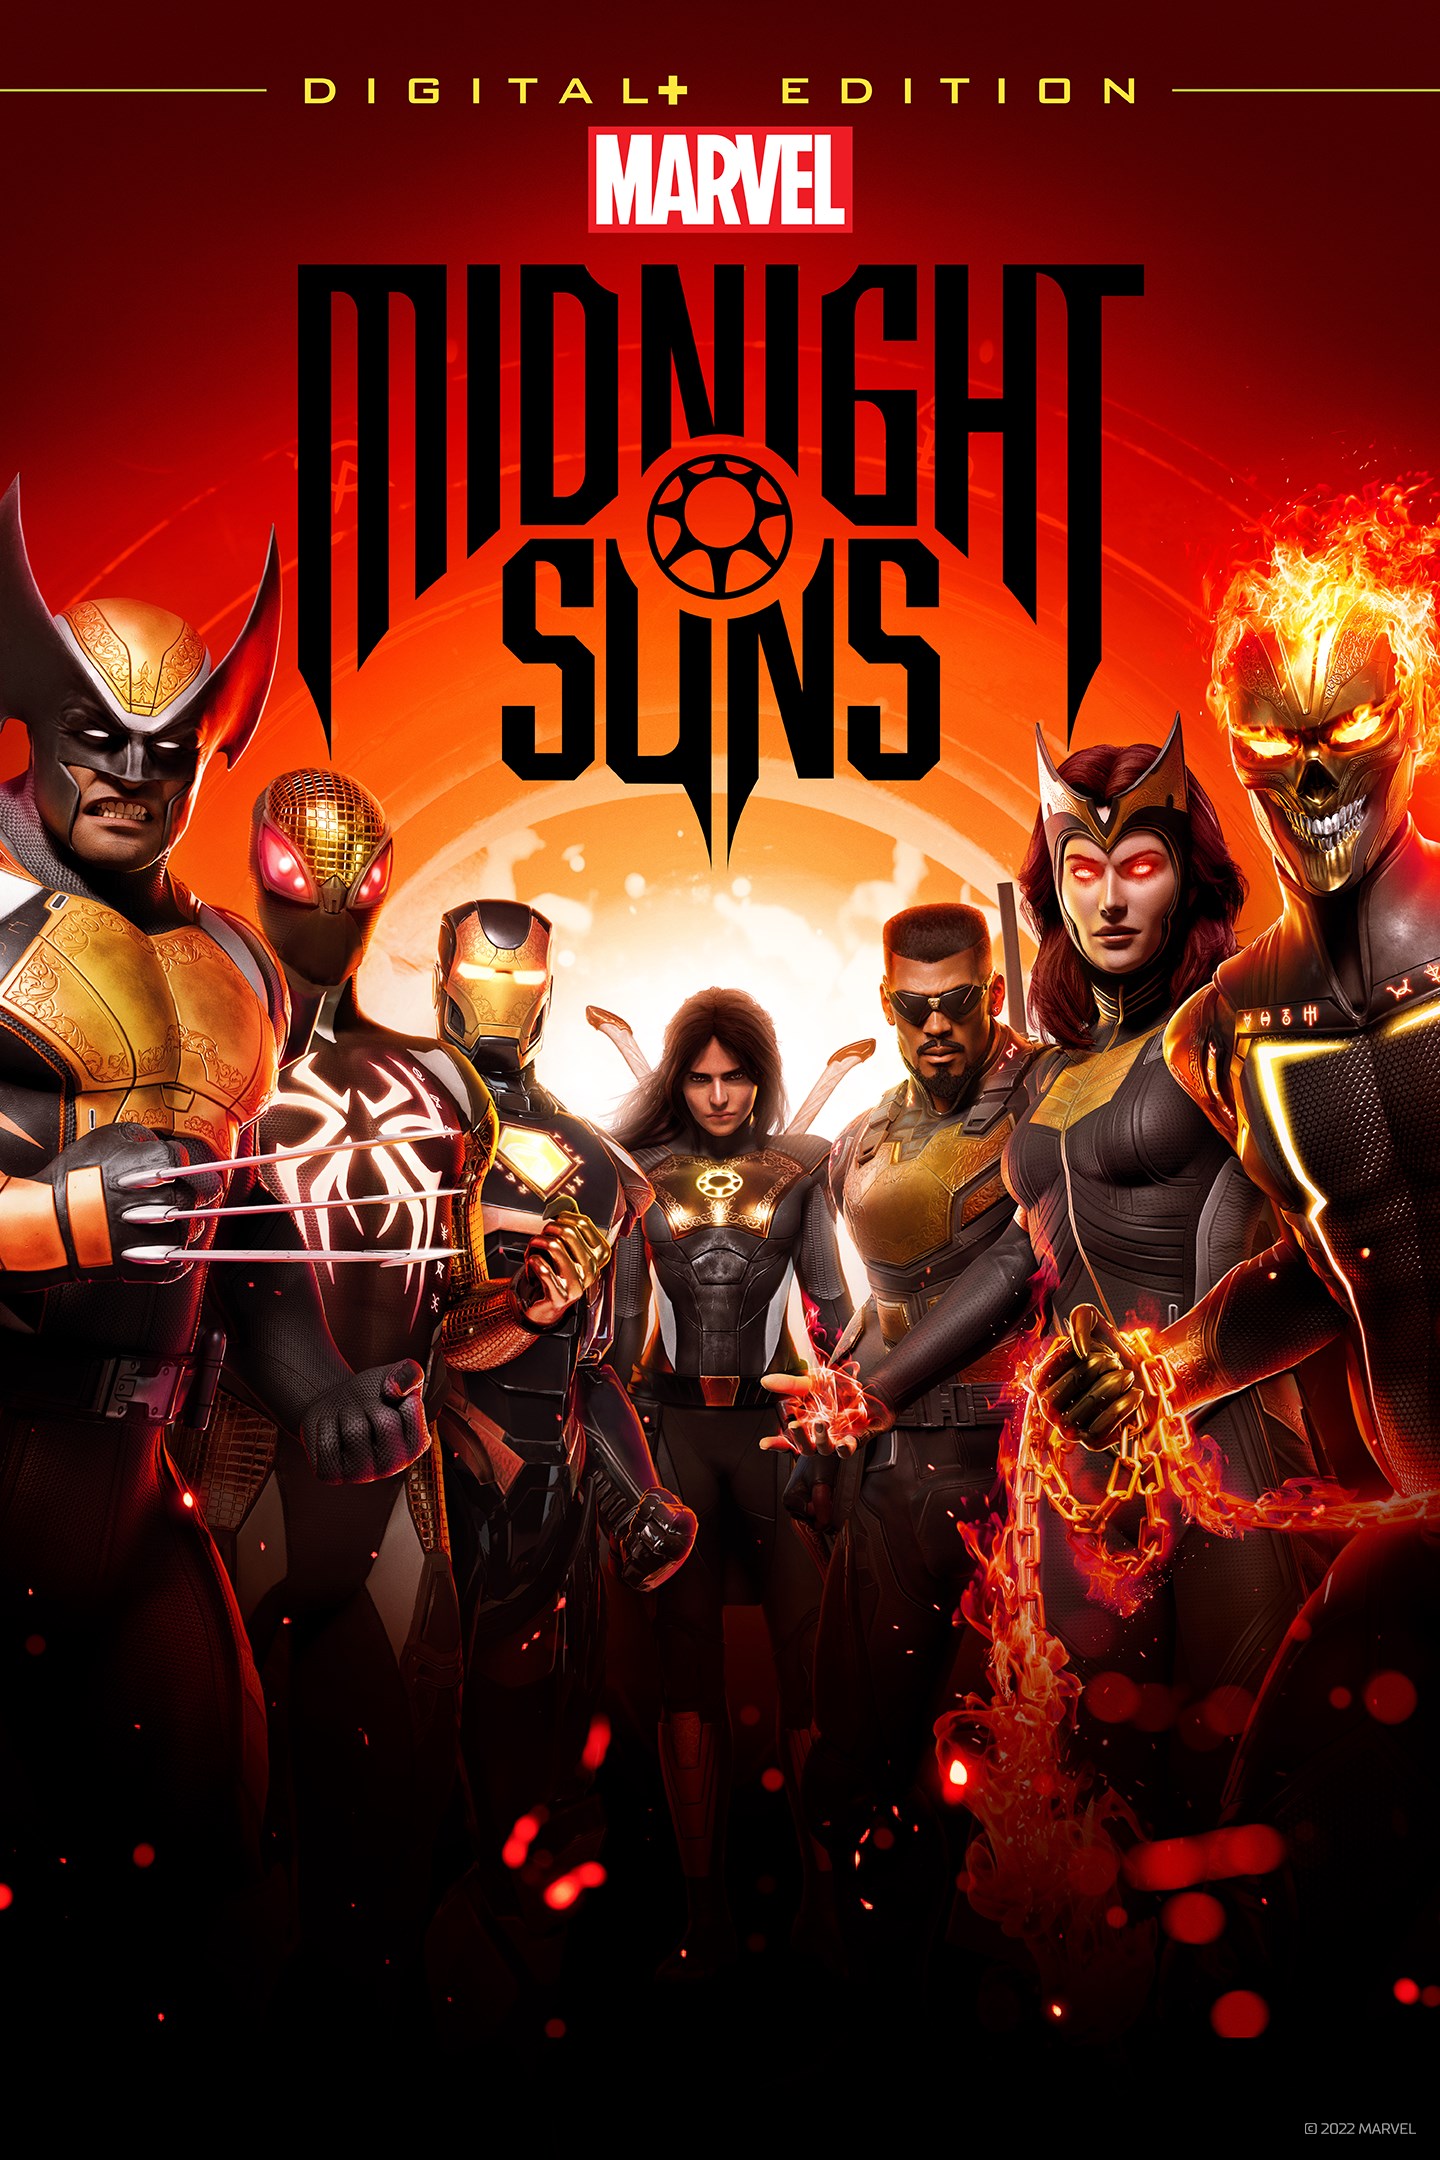 Marvel's Midnight Suns Digital+ Edition boxshot